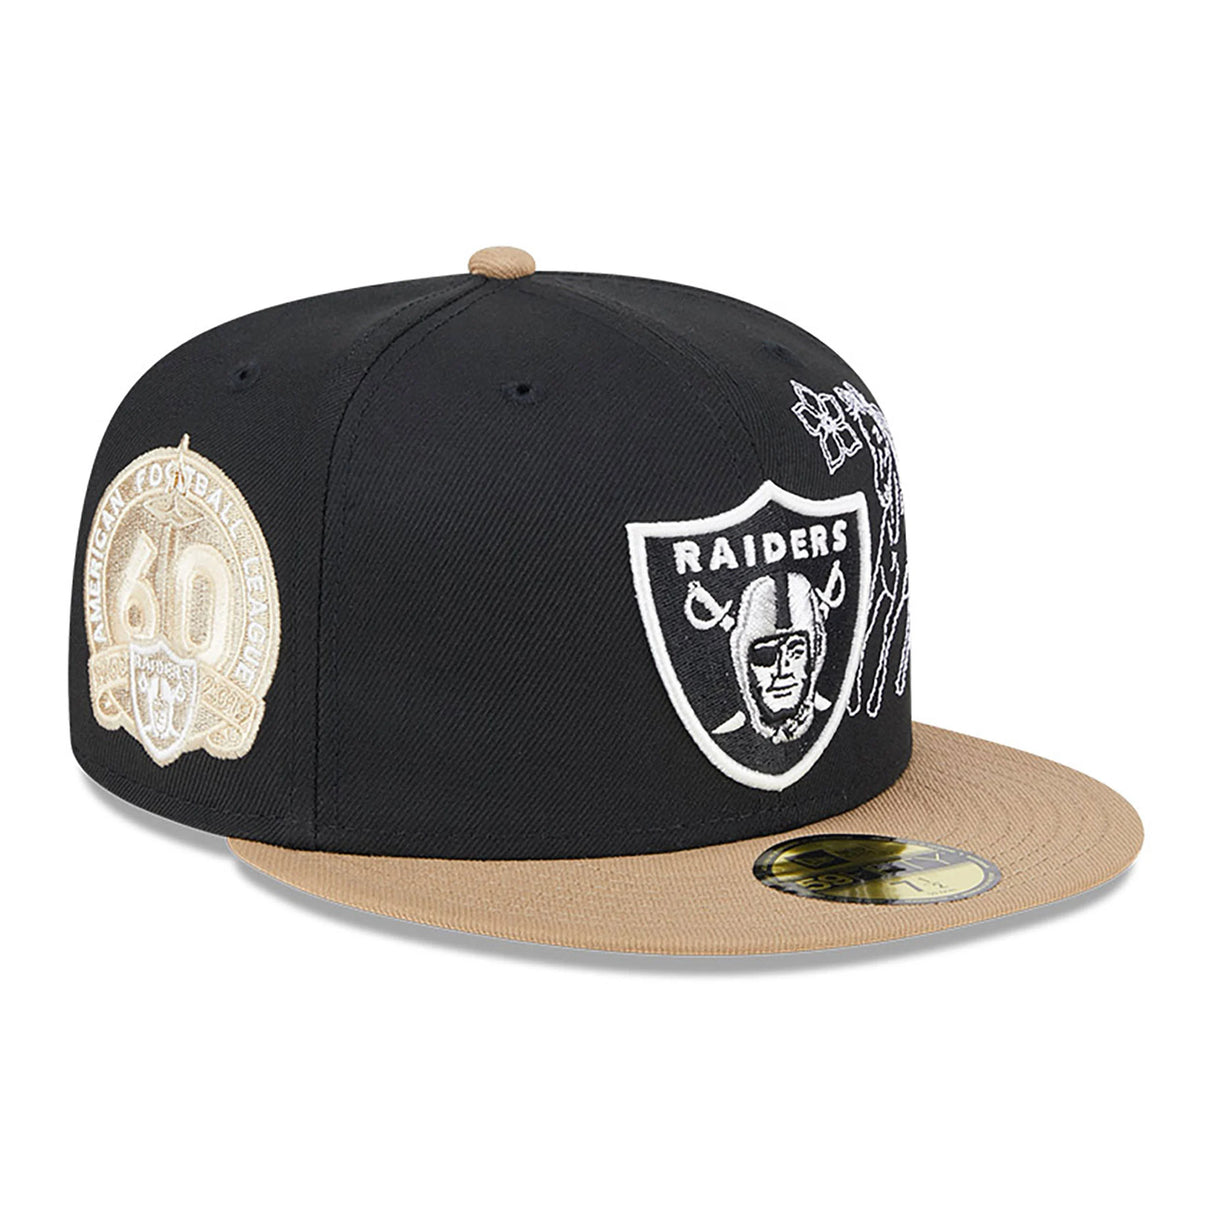 New Era Las Vegas Raiders Western Khaki Black & Tan 59Fifty Fitted Hat